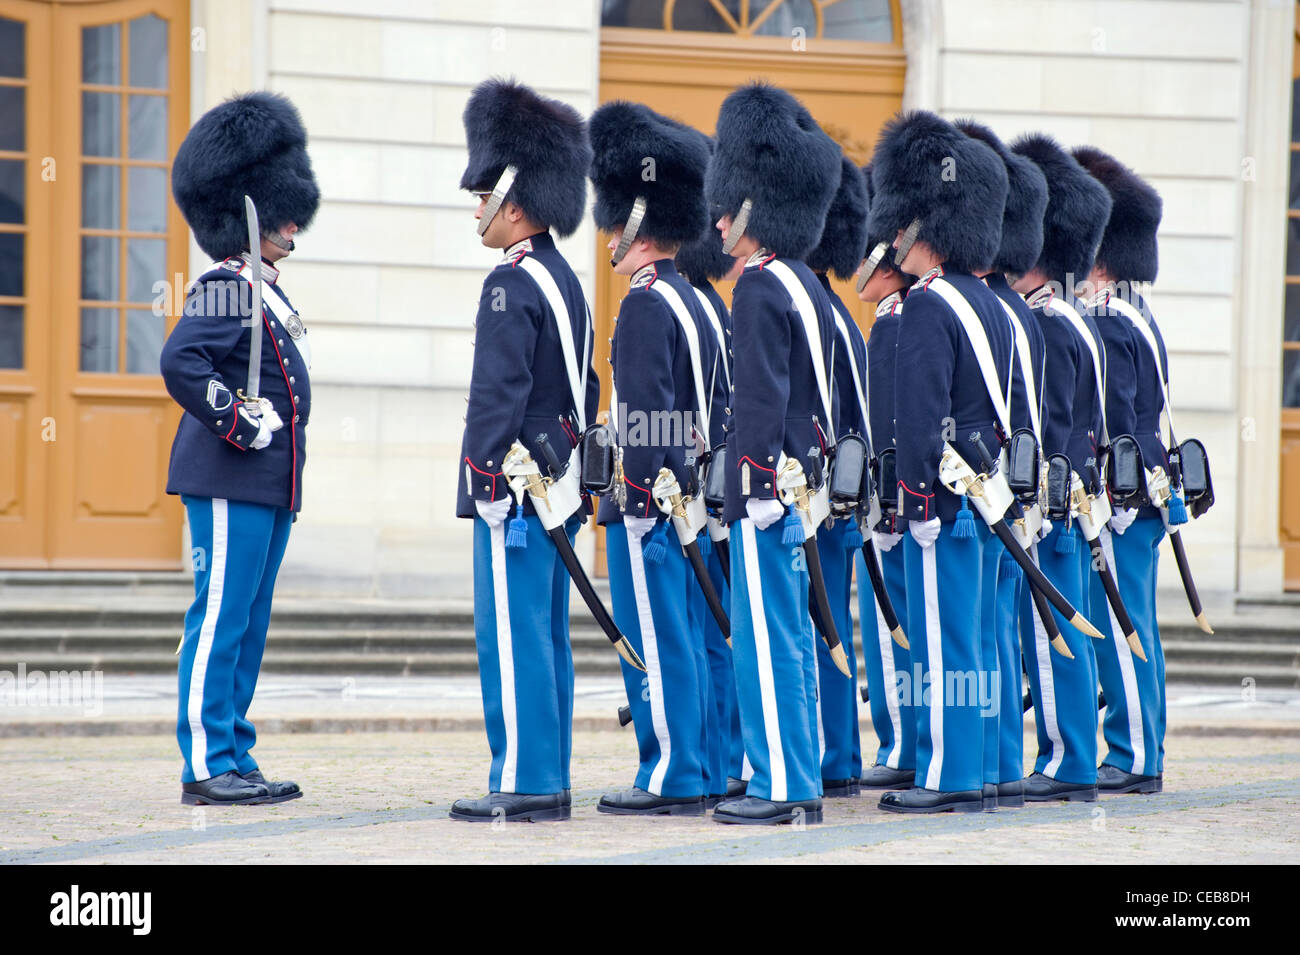 Danish guard hi-res stock photography images - Alamy